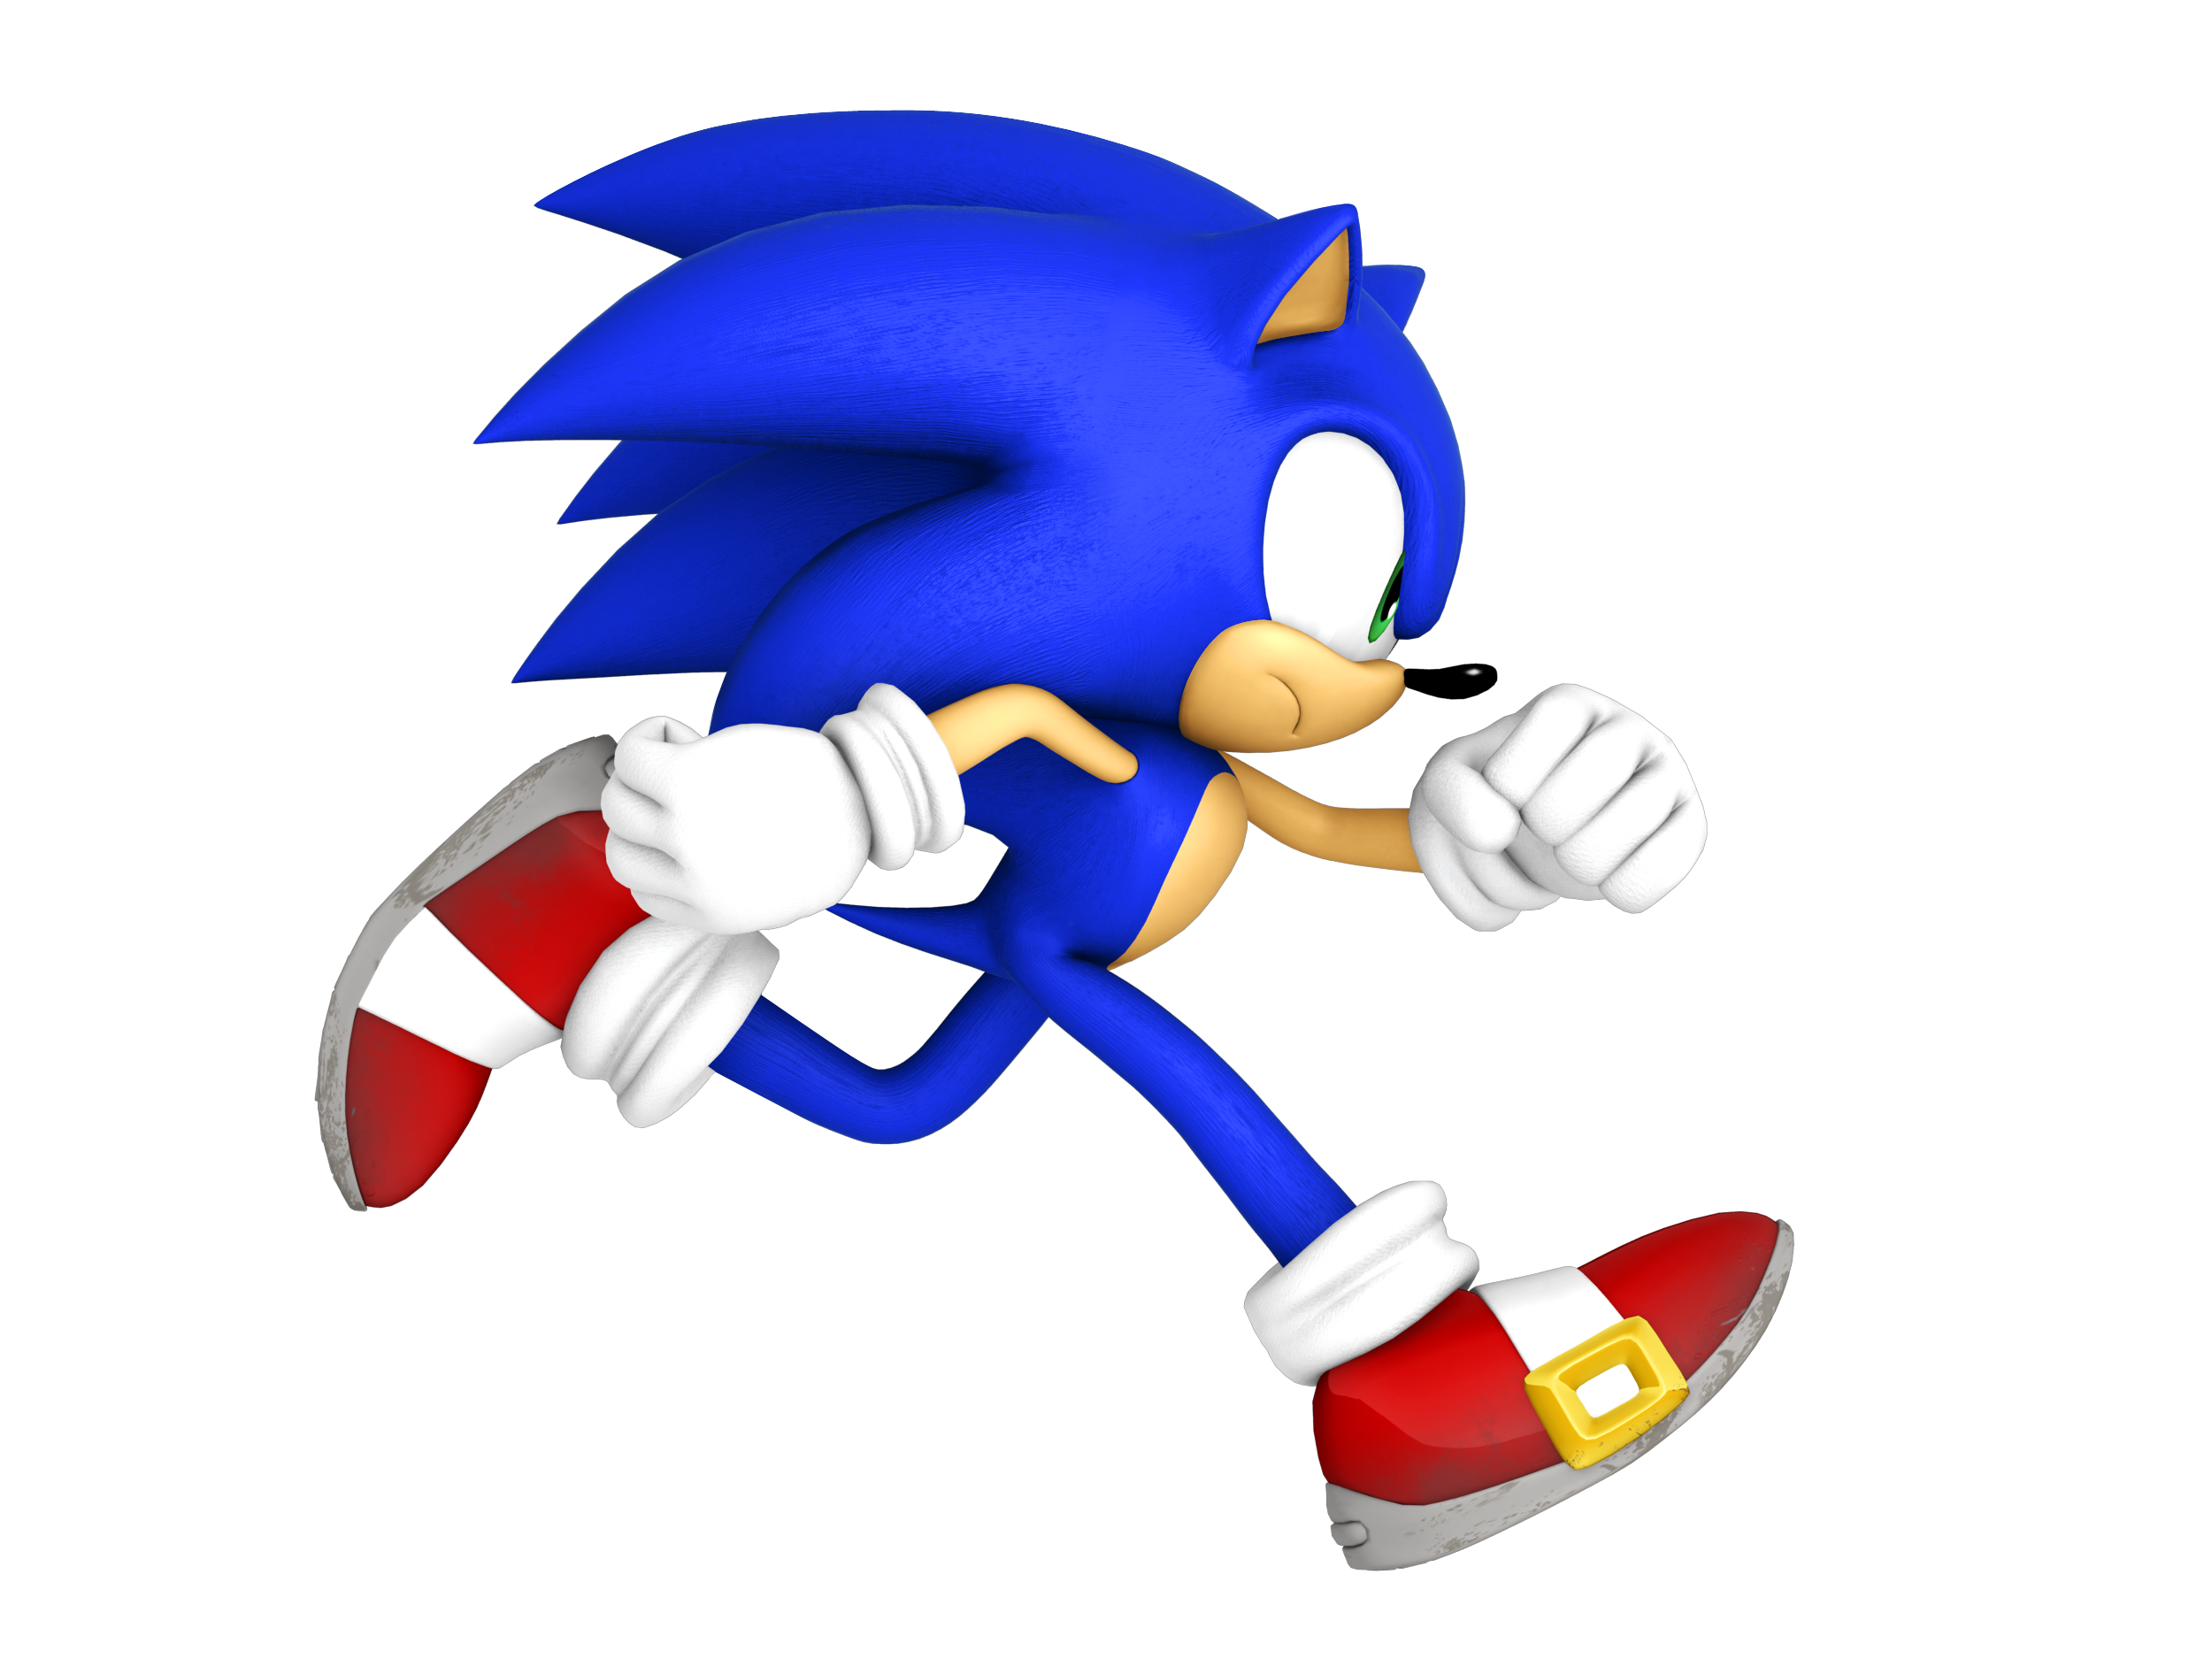 Sonic_The_Hedgehog_4_-_Sonic_Artwork_-_2